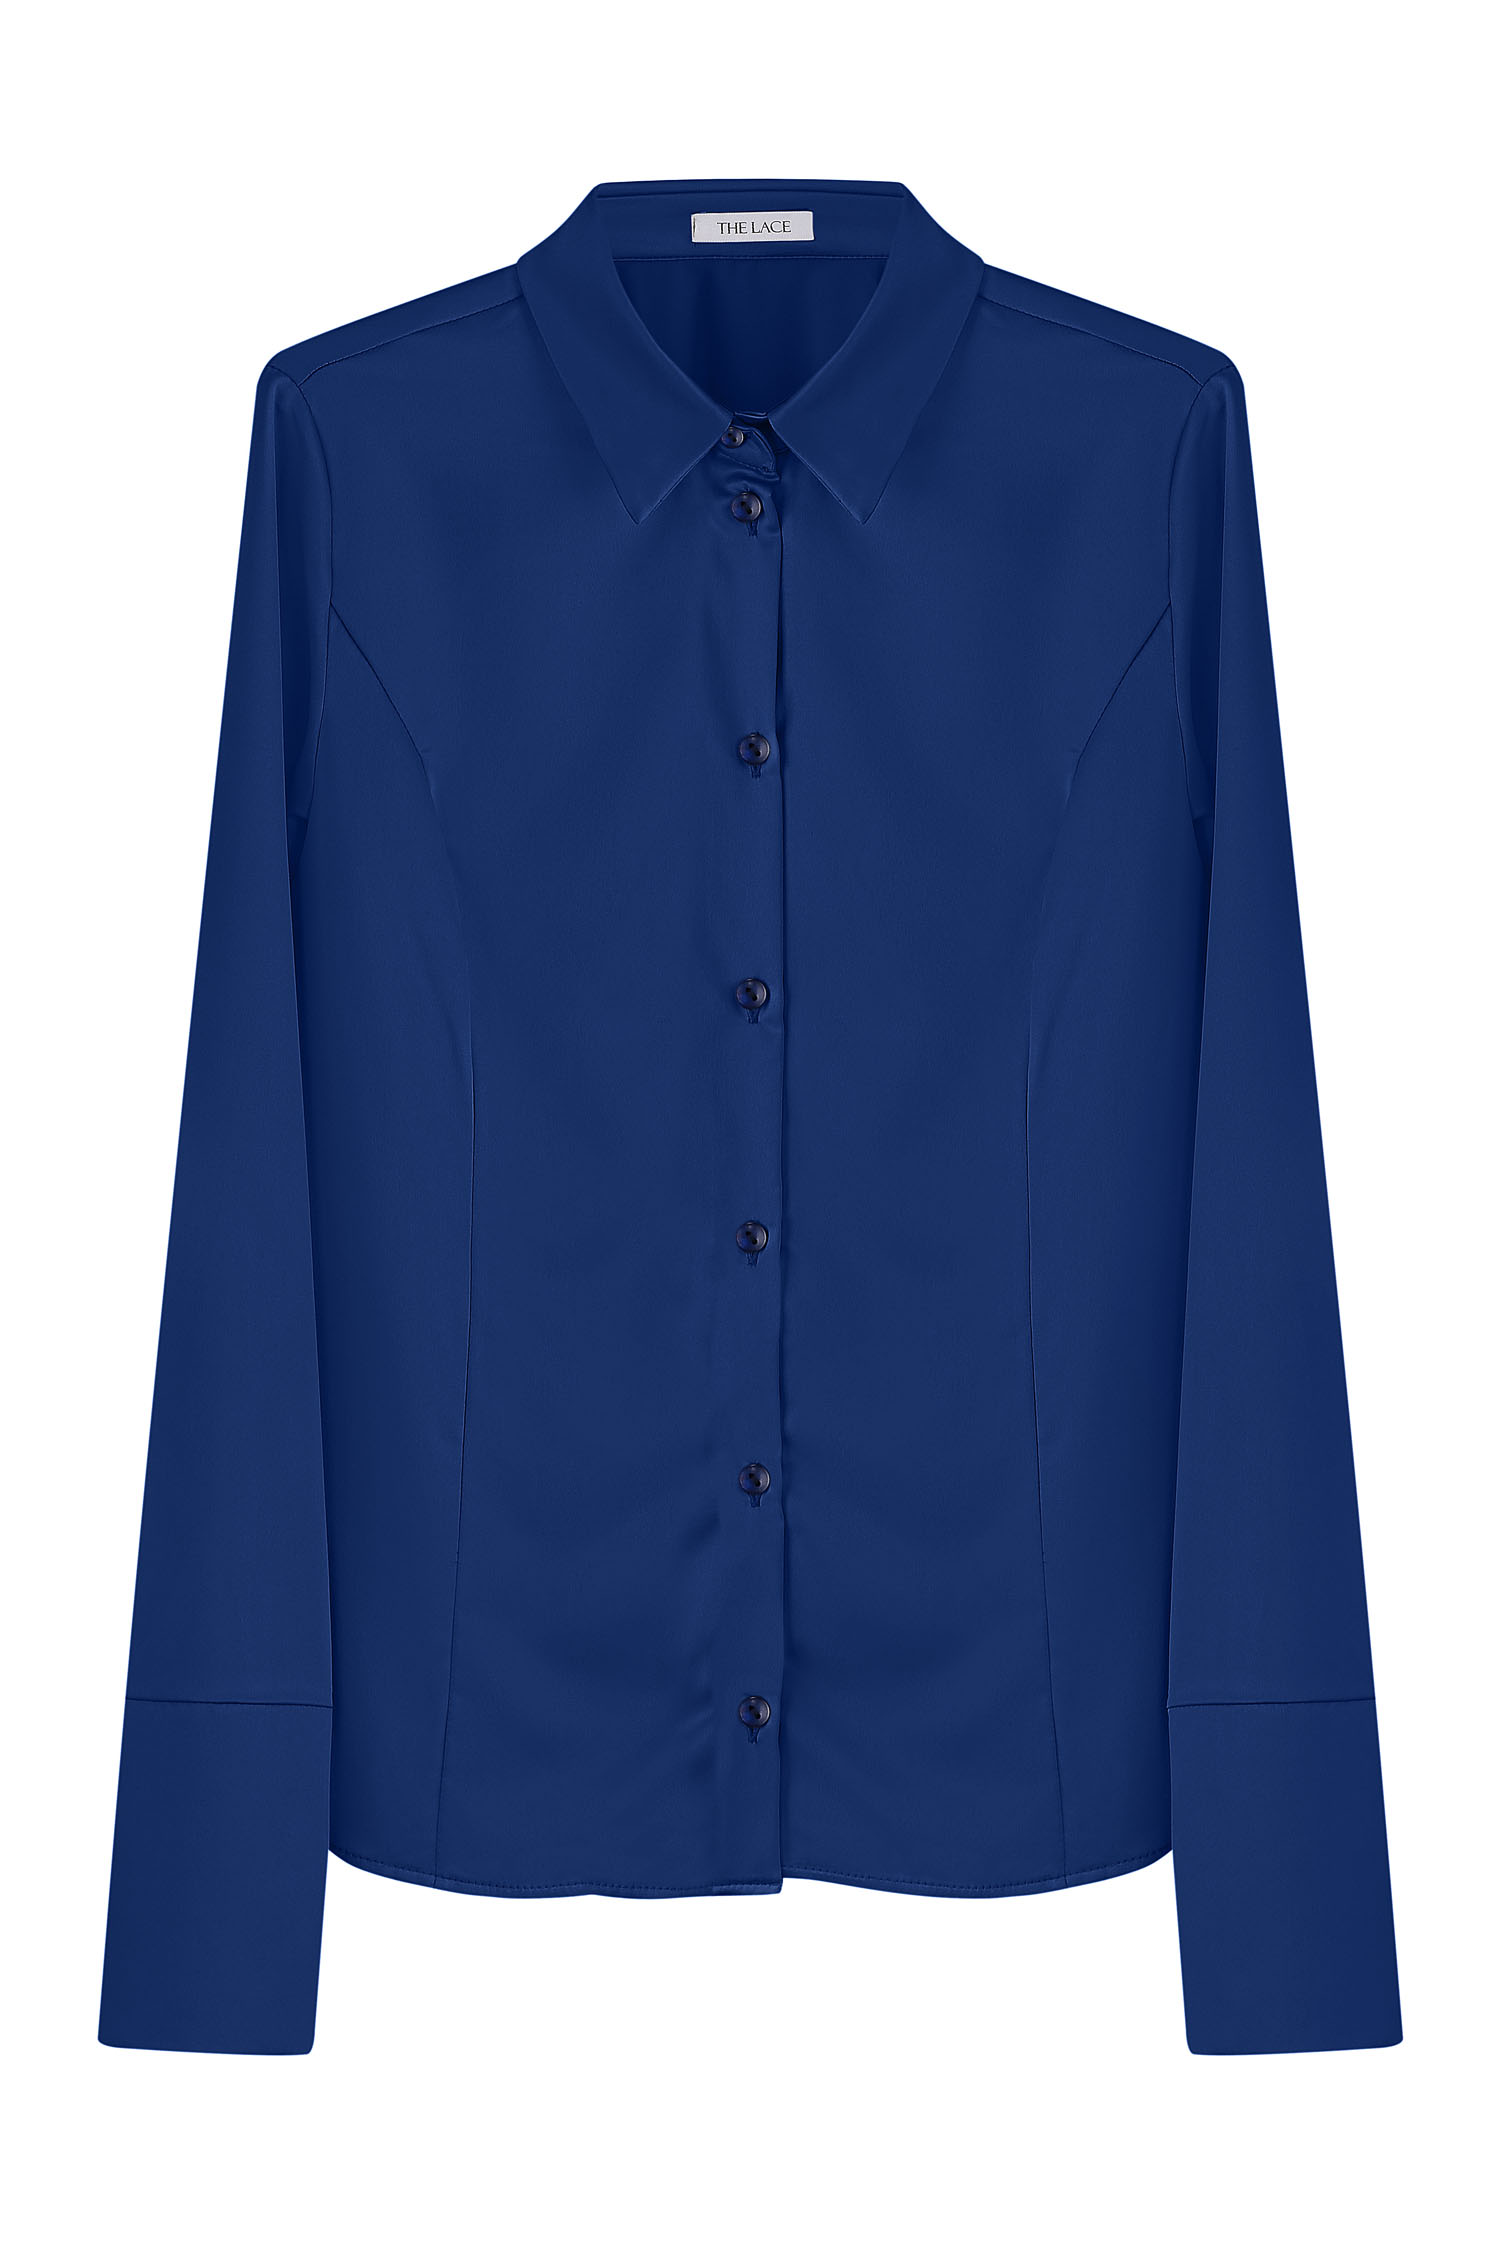 Блуза з широкими манжетами синя - THE LACE фото 134876